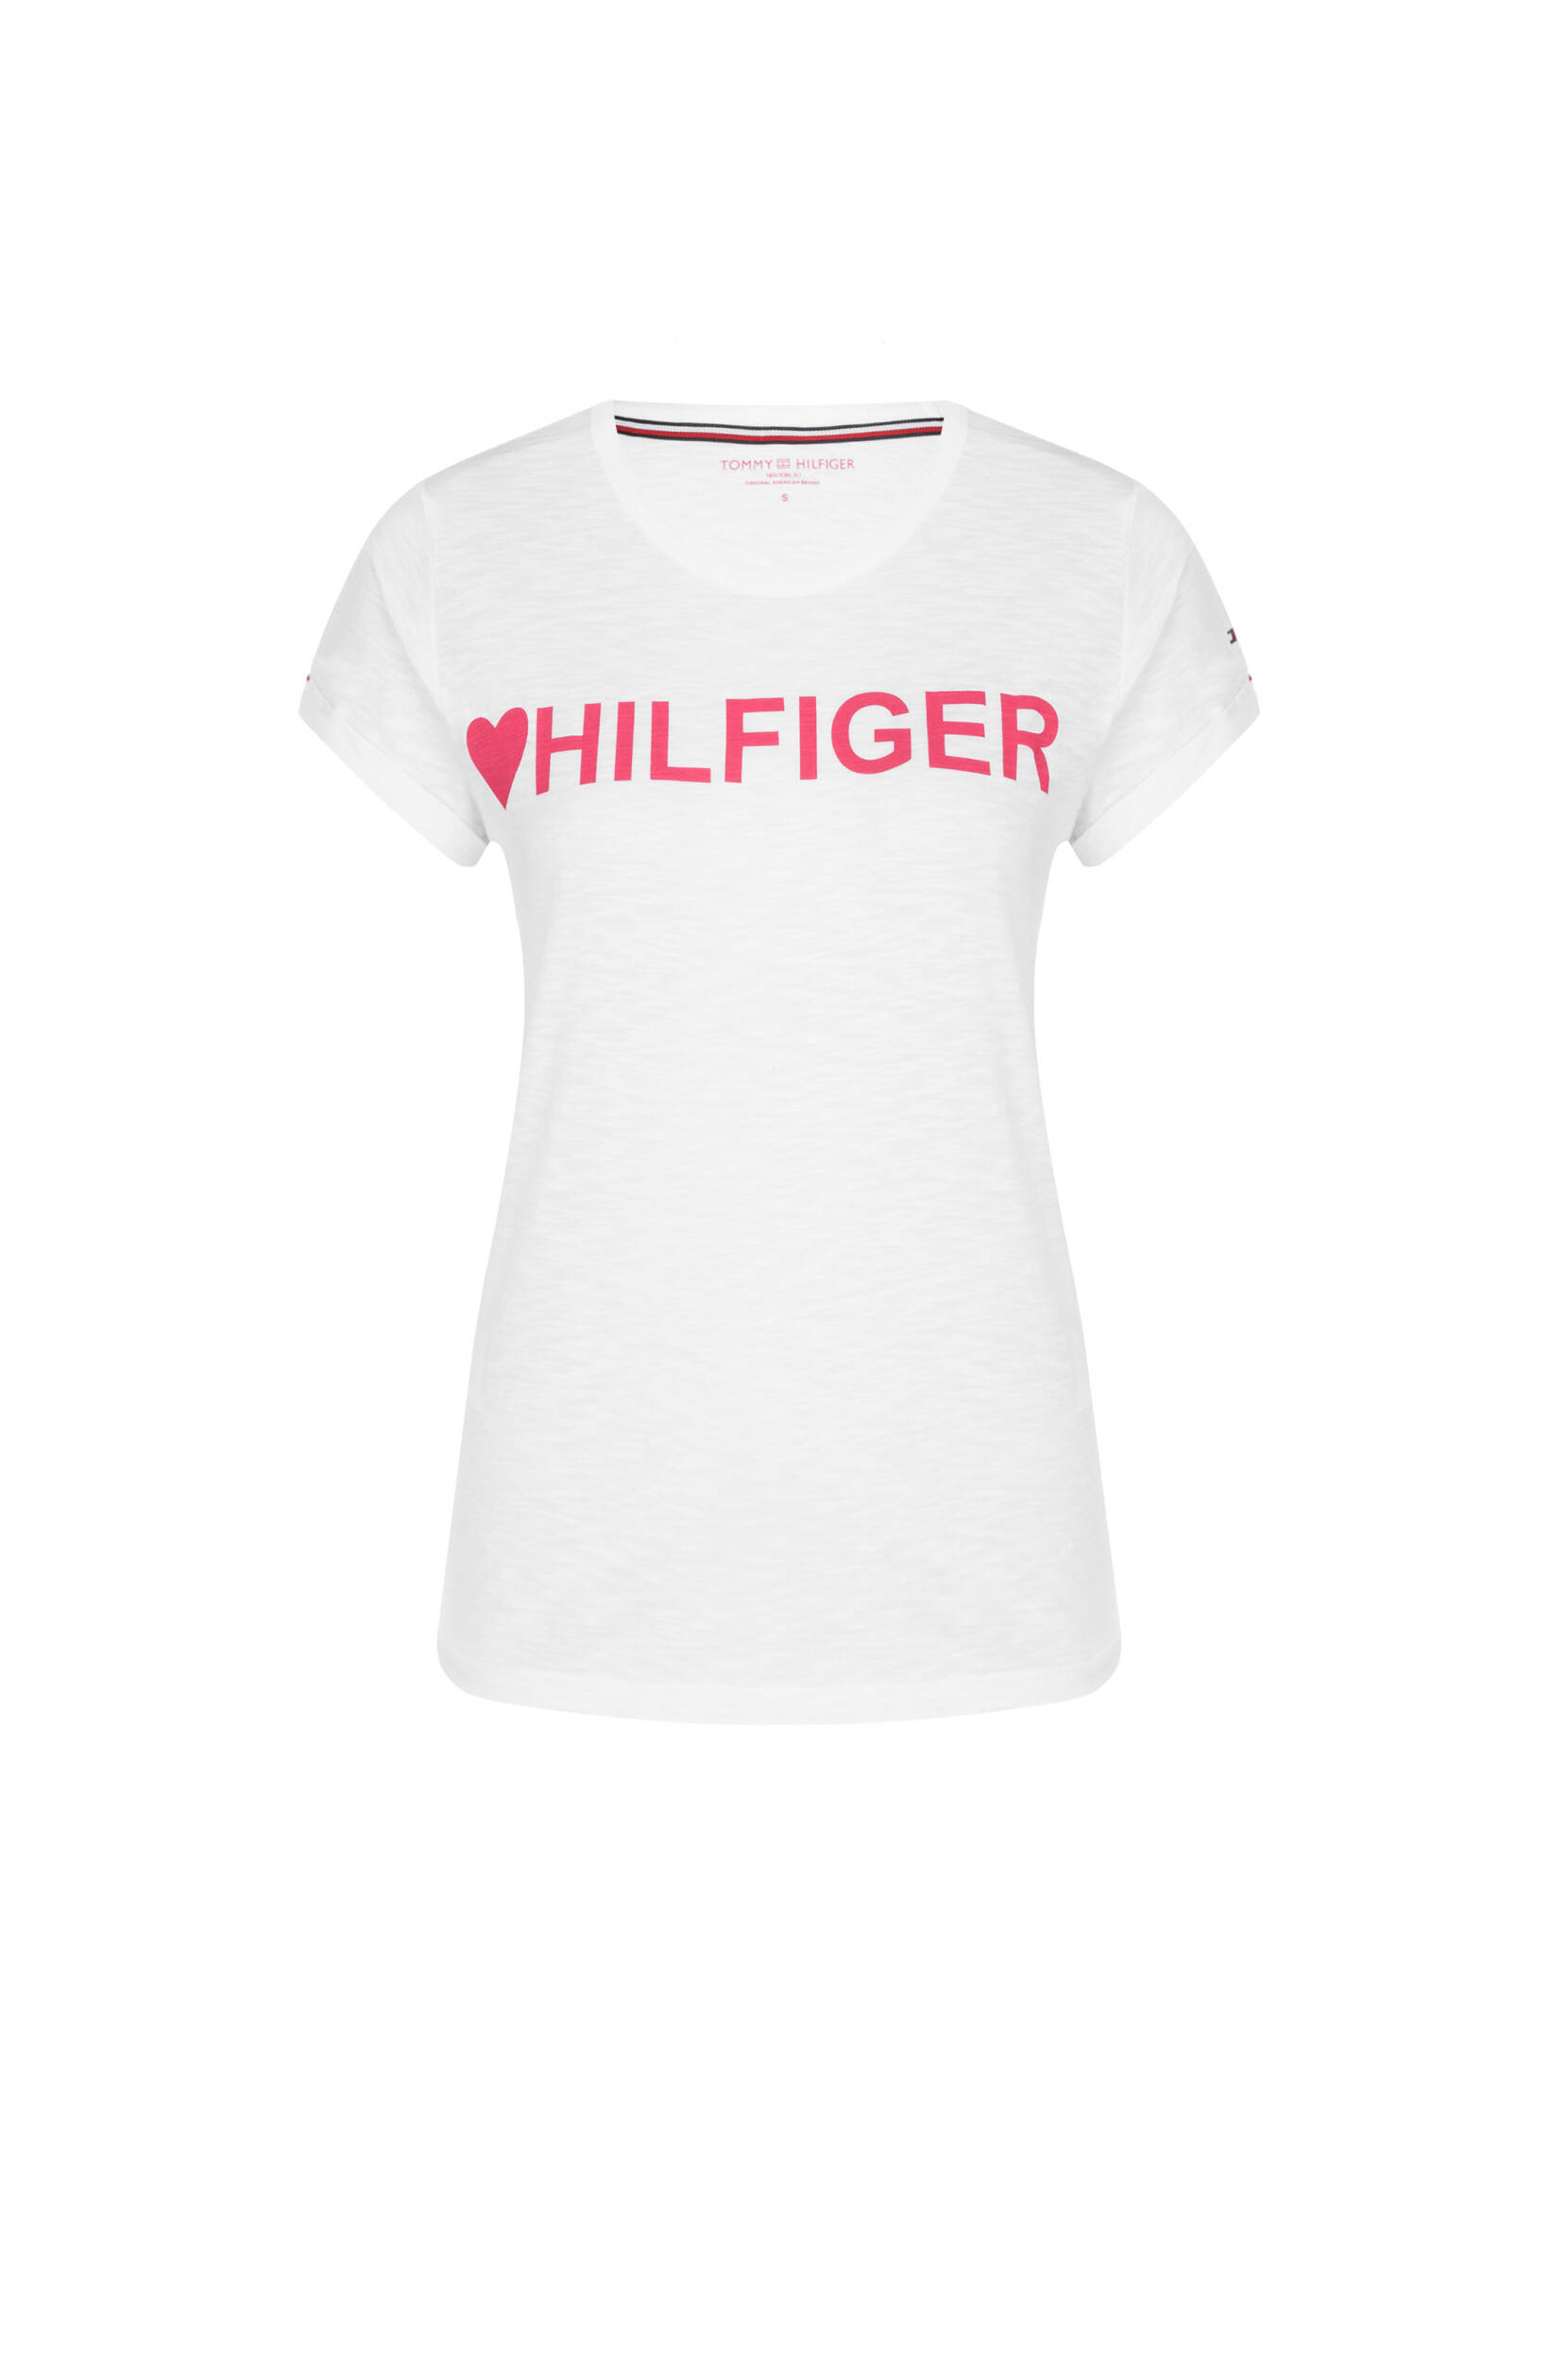 Slogan T-shirt Tommy Hilfiger | White | Gomez.pl/en